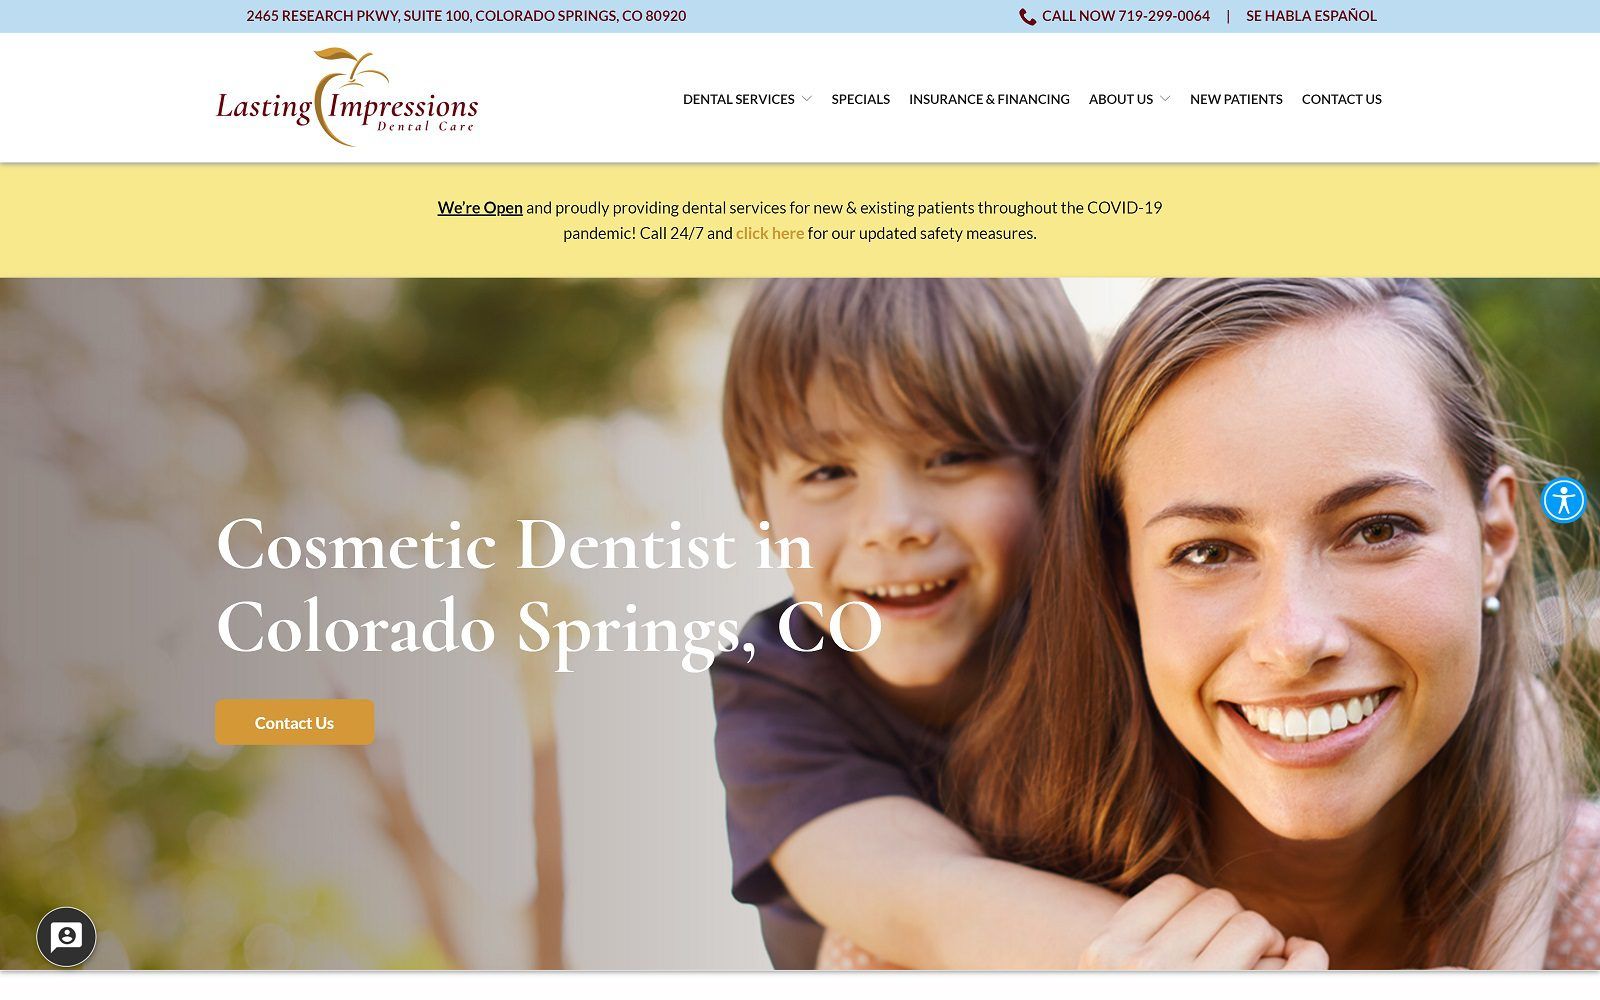 The screenshot of lasting impressions dental care website